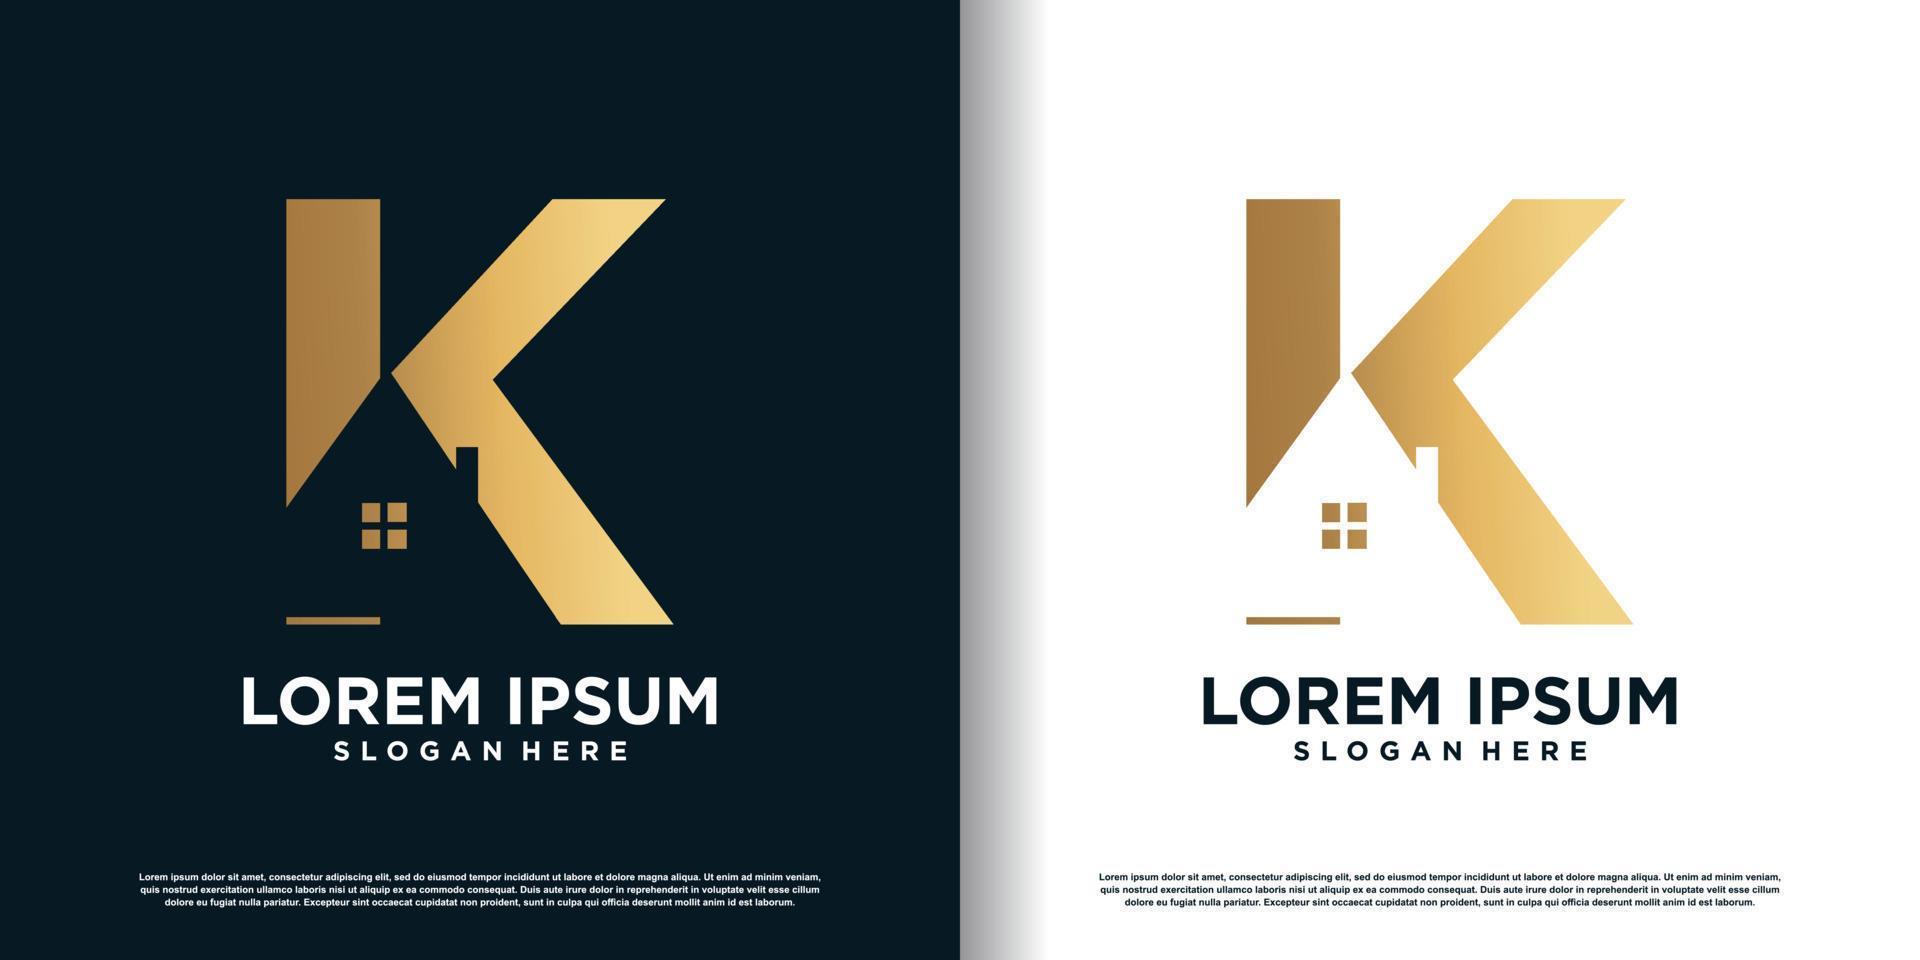 letter k logo design vector with creative house concept premium vector